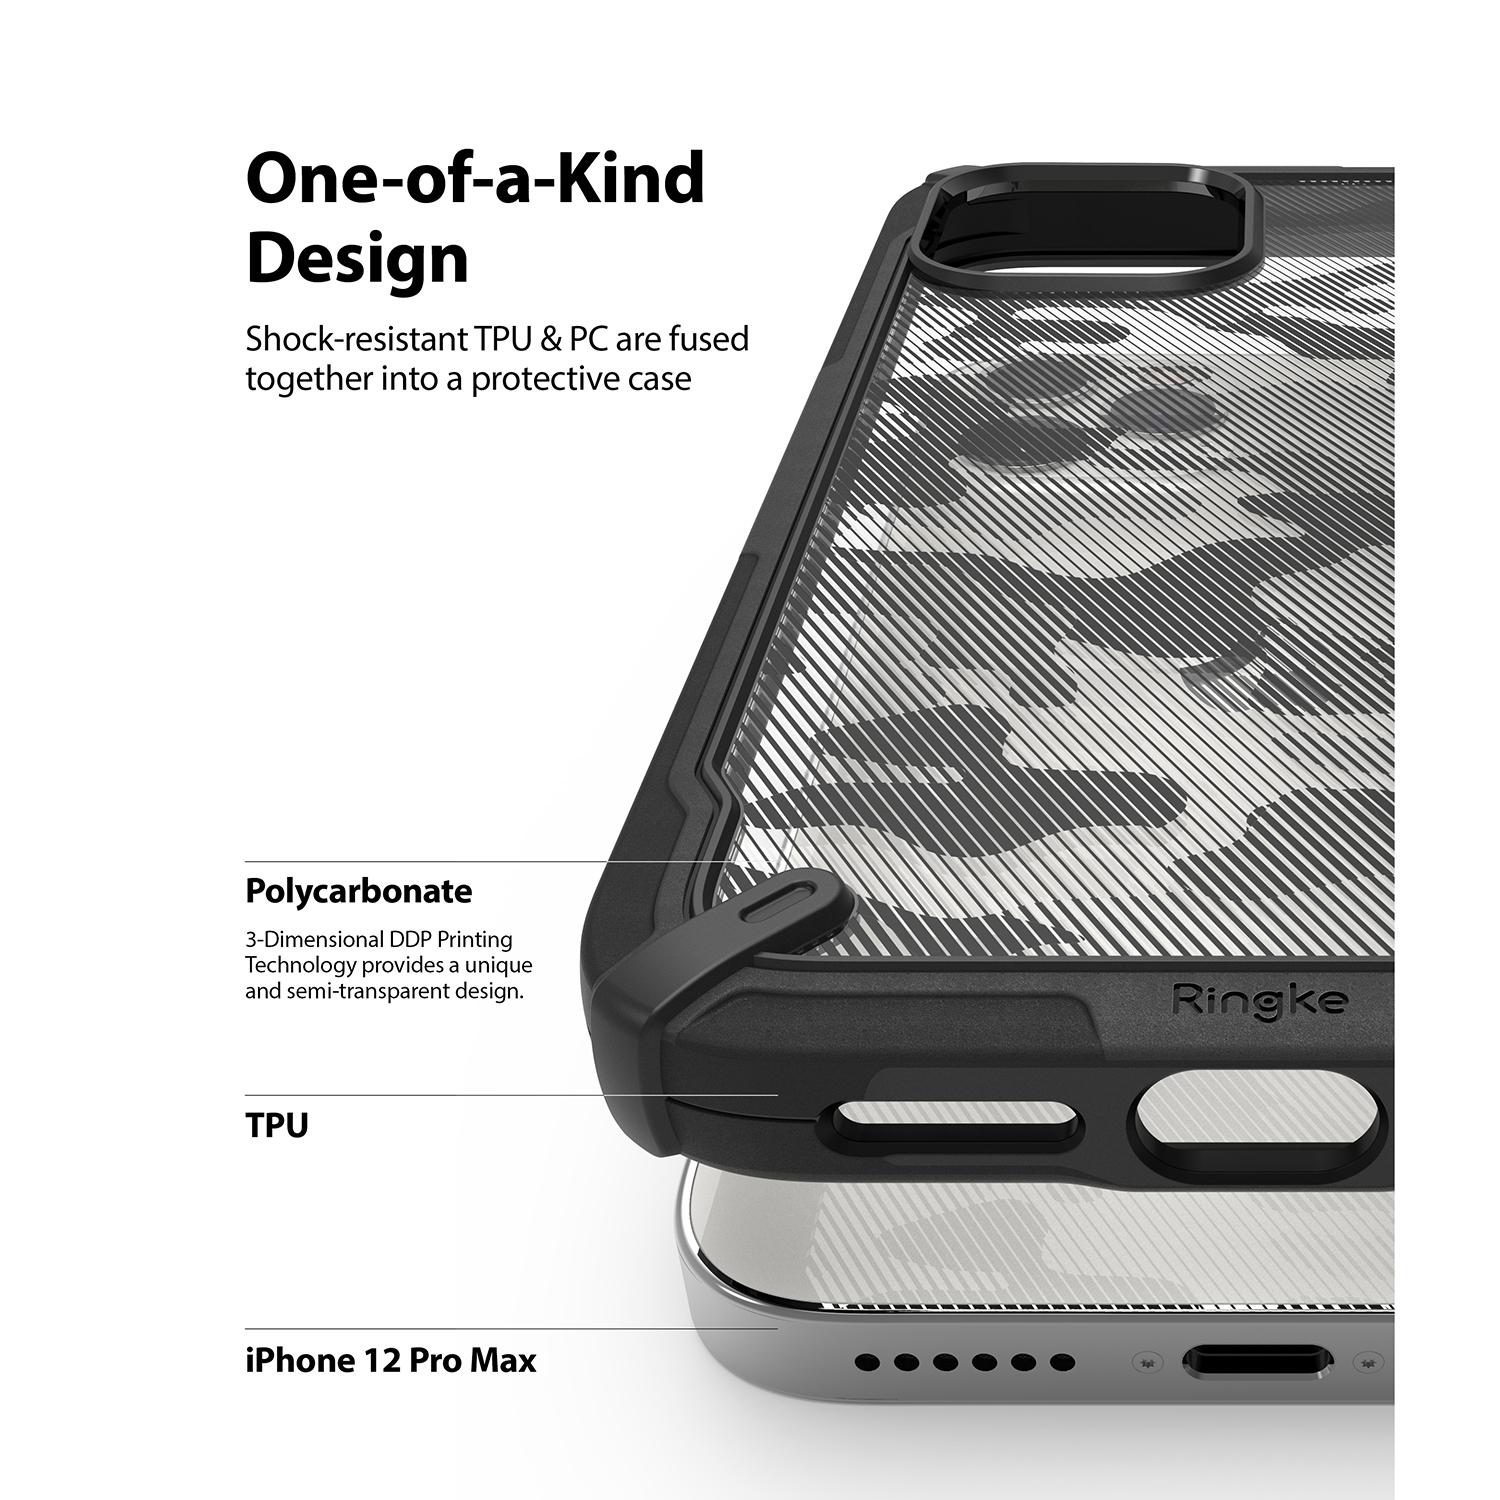 iPhone 12 Pro Max Fusion X Design Case Camo Black